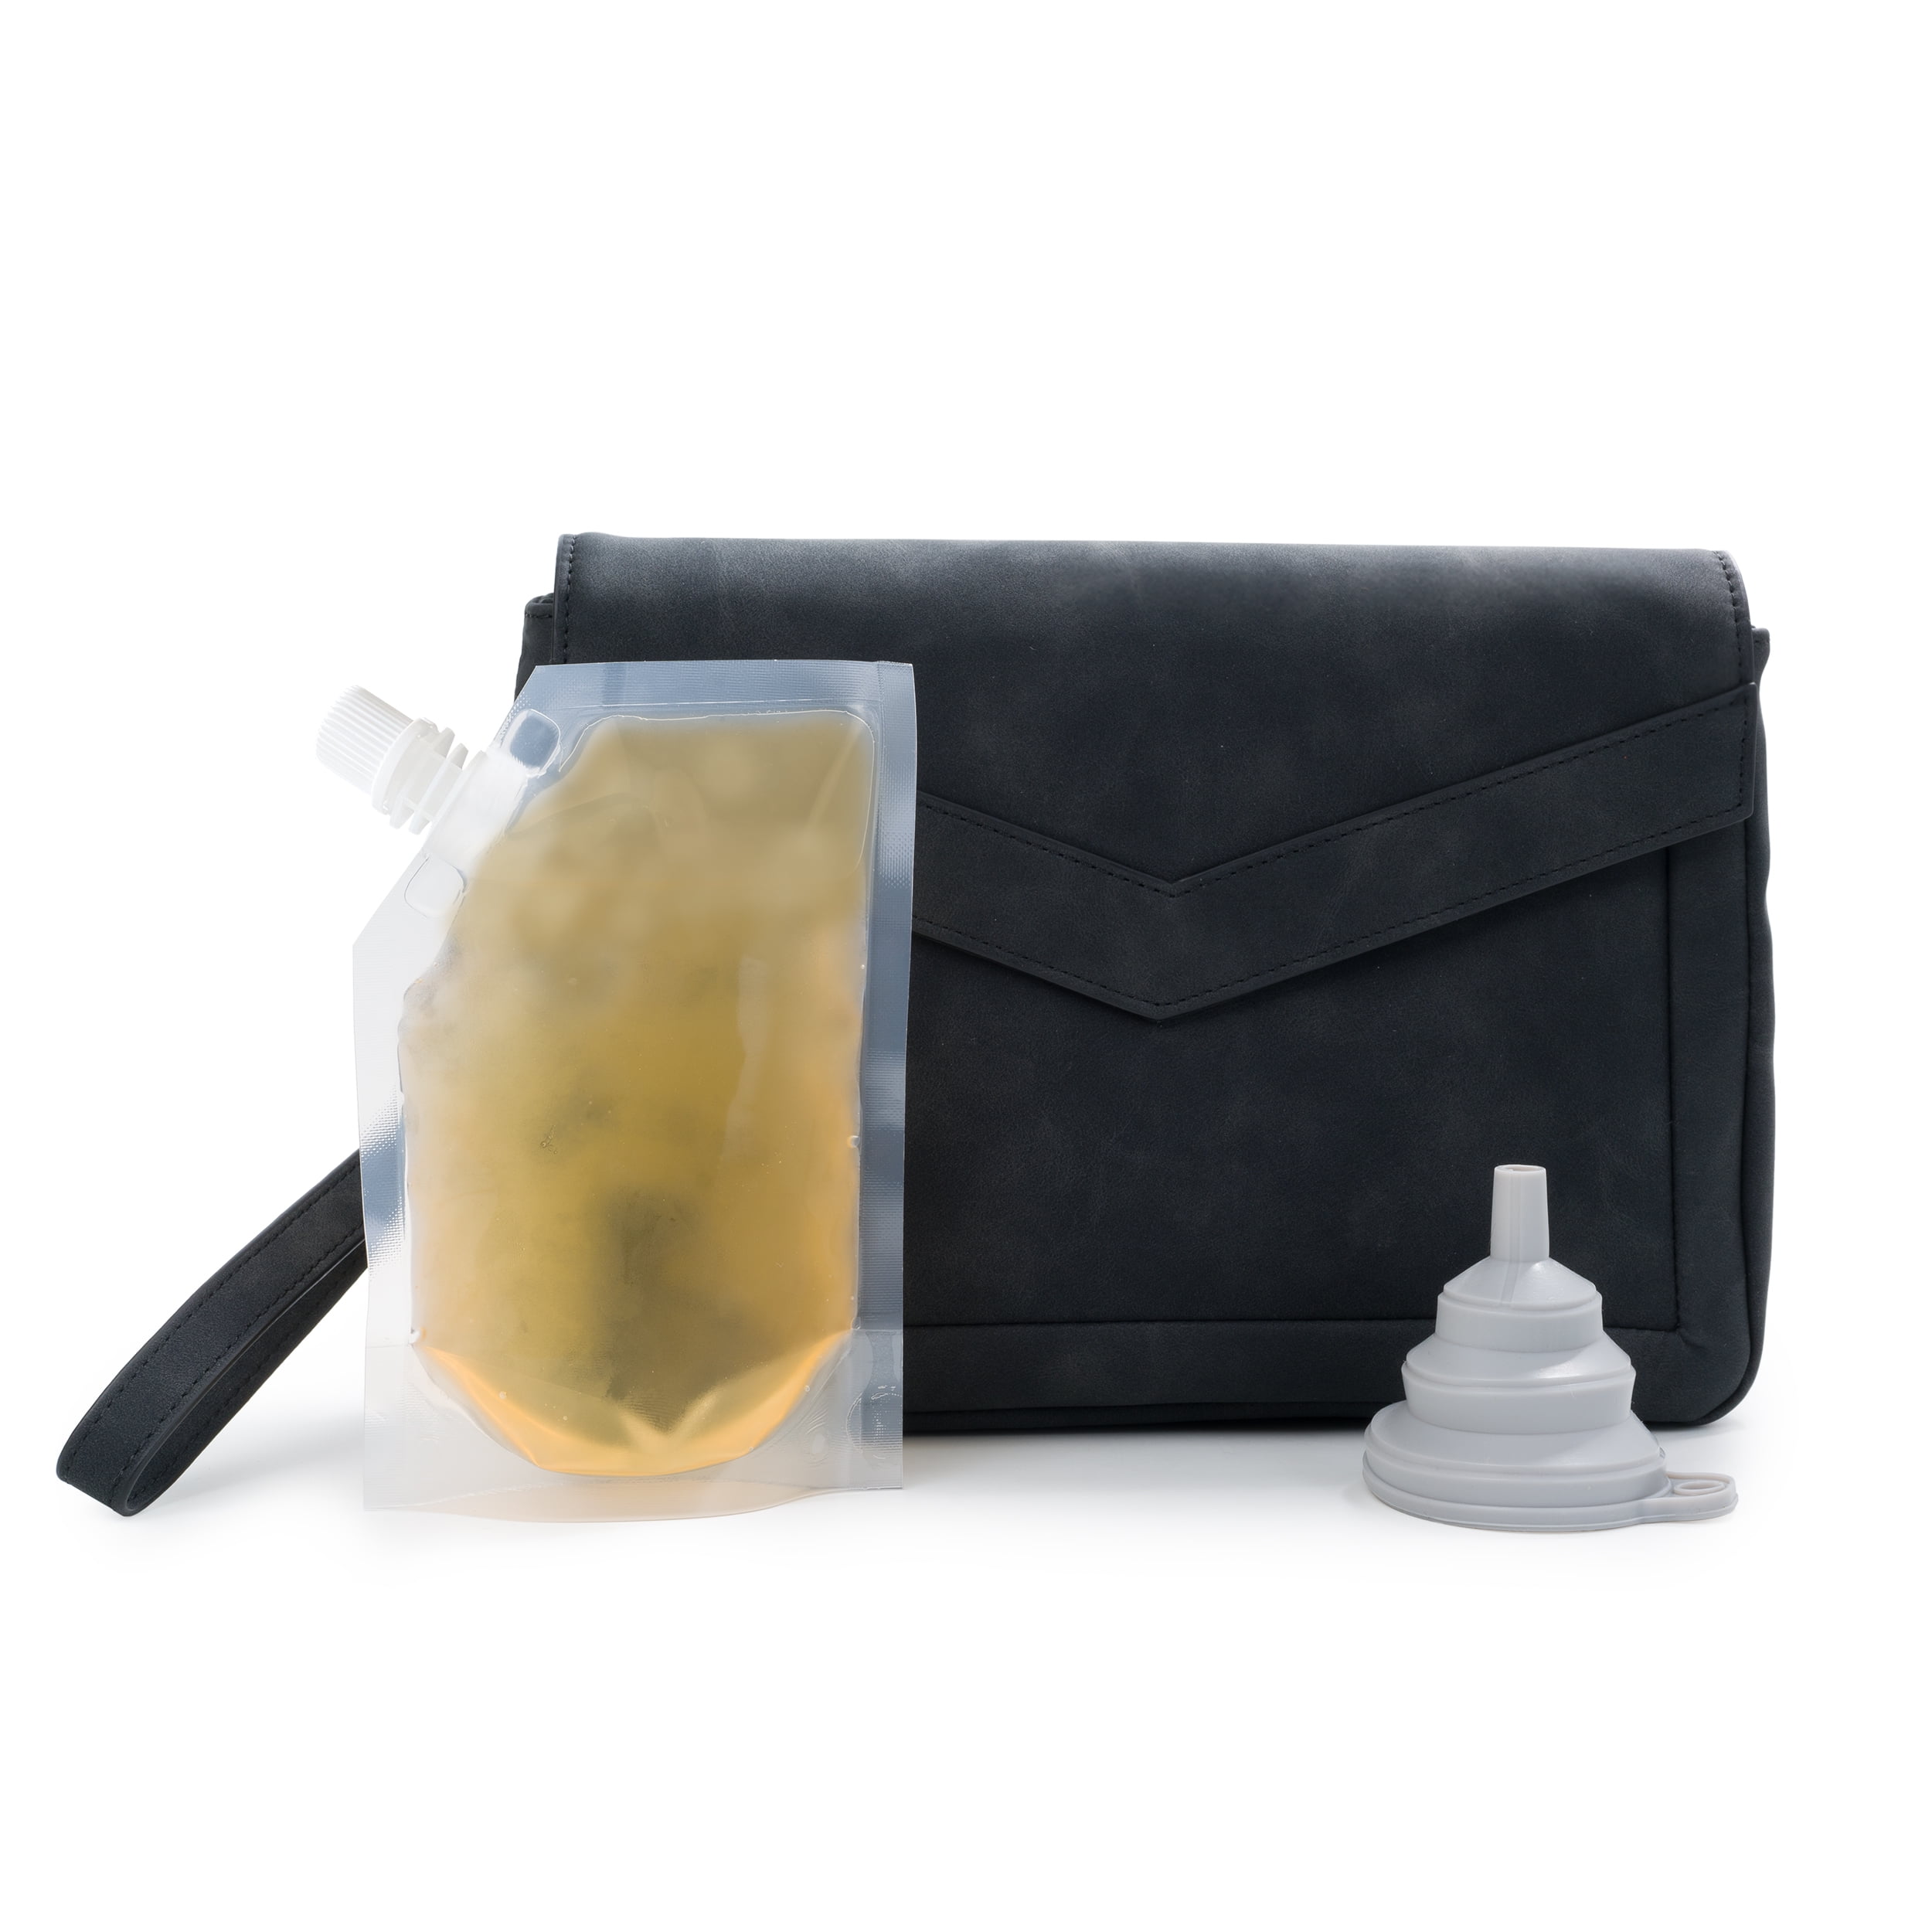 32 oz black leather croc flask purse | Theflaskclutch